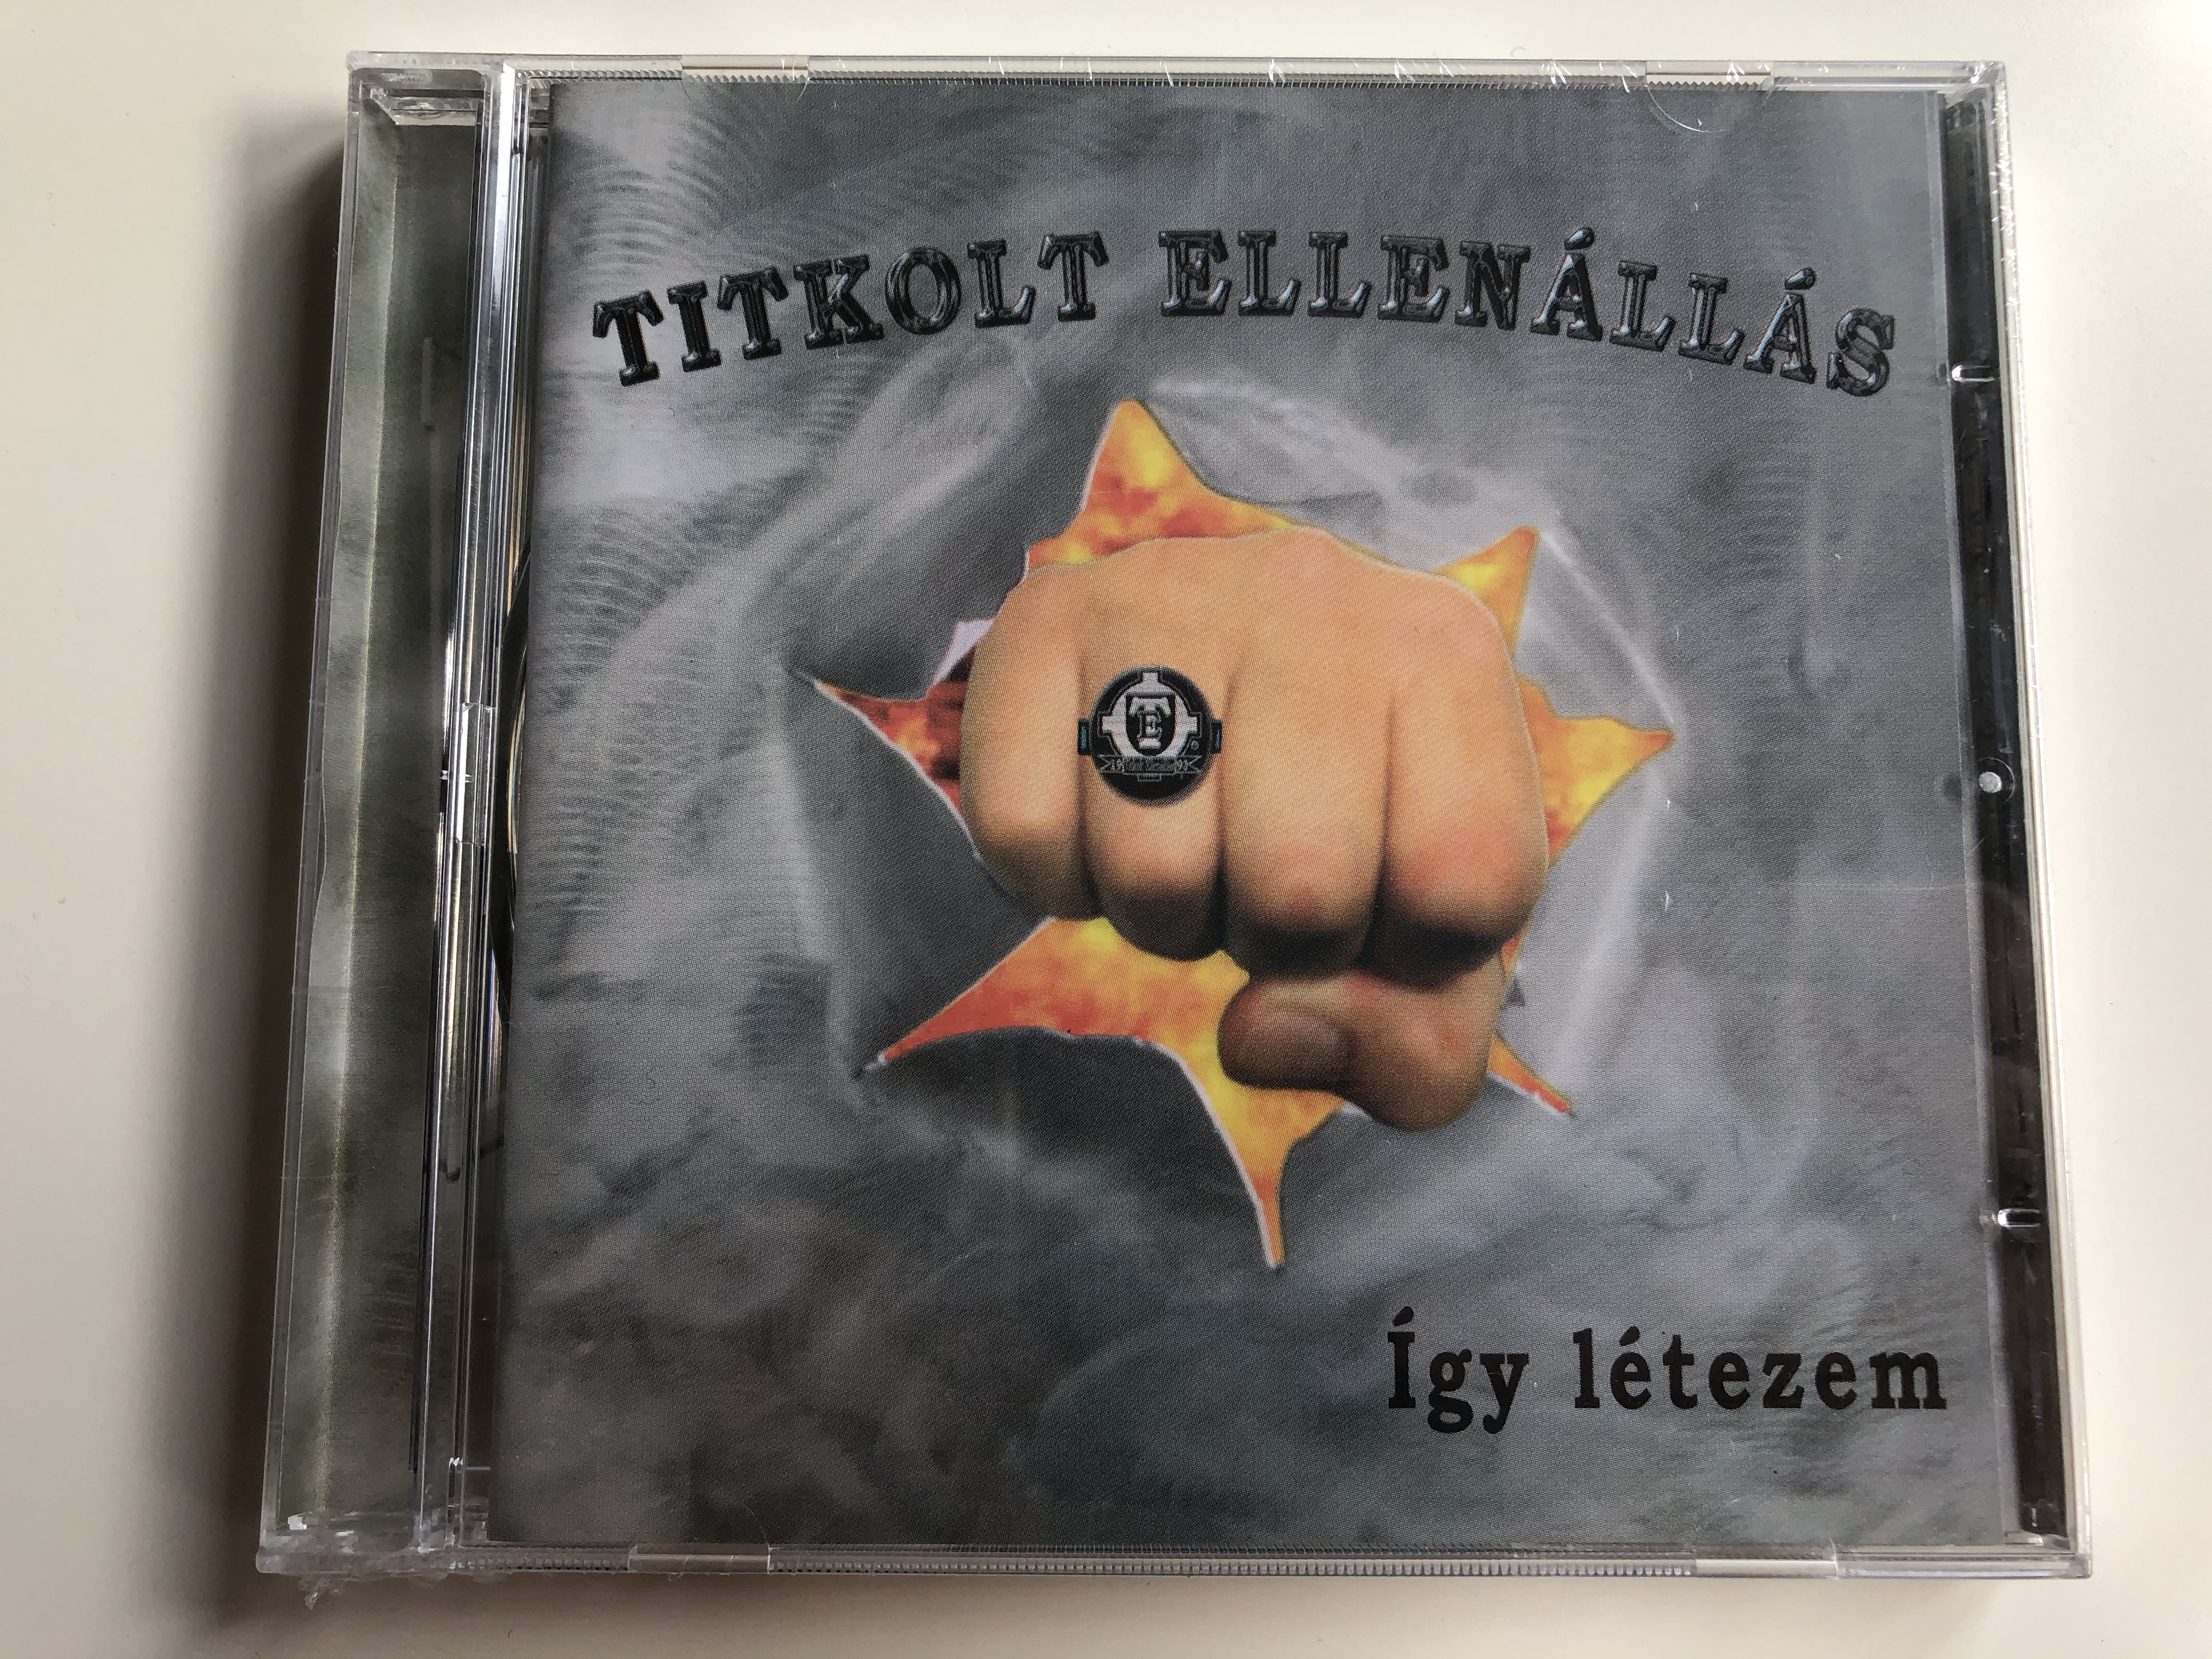 titkolt-ellen-ll-s-gy-l-tezem-titkolt-records-audio-cd-2005-tr001-1-.jpg